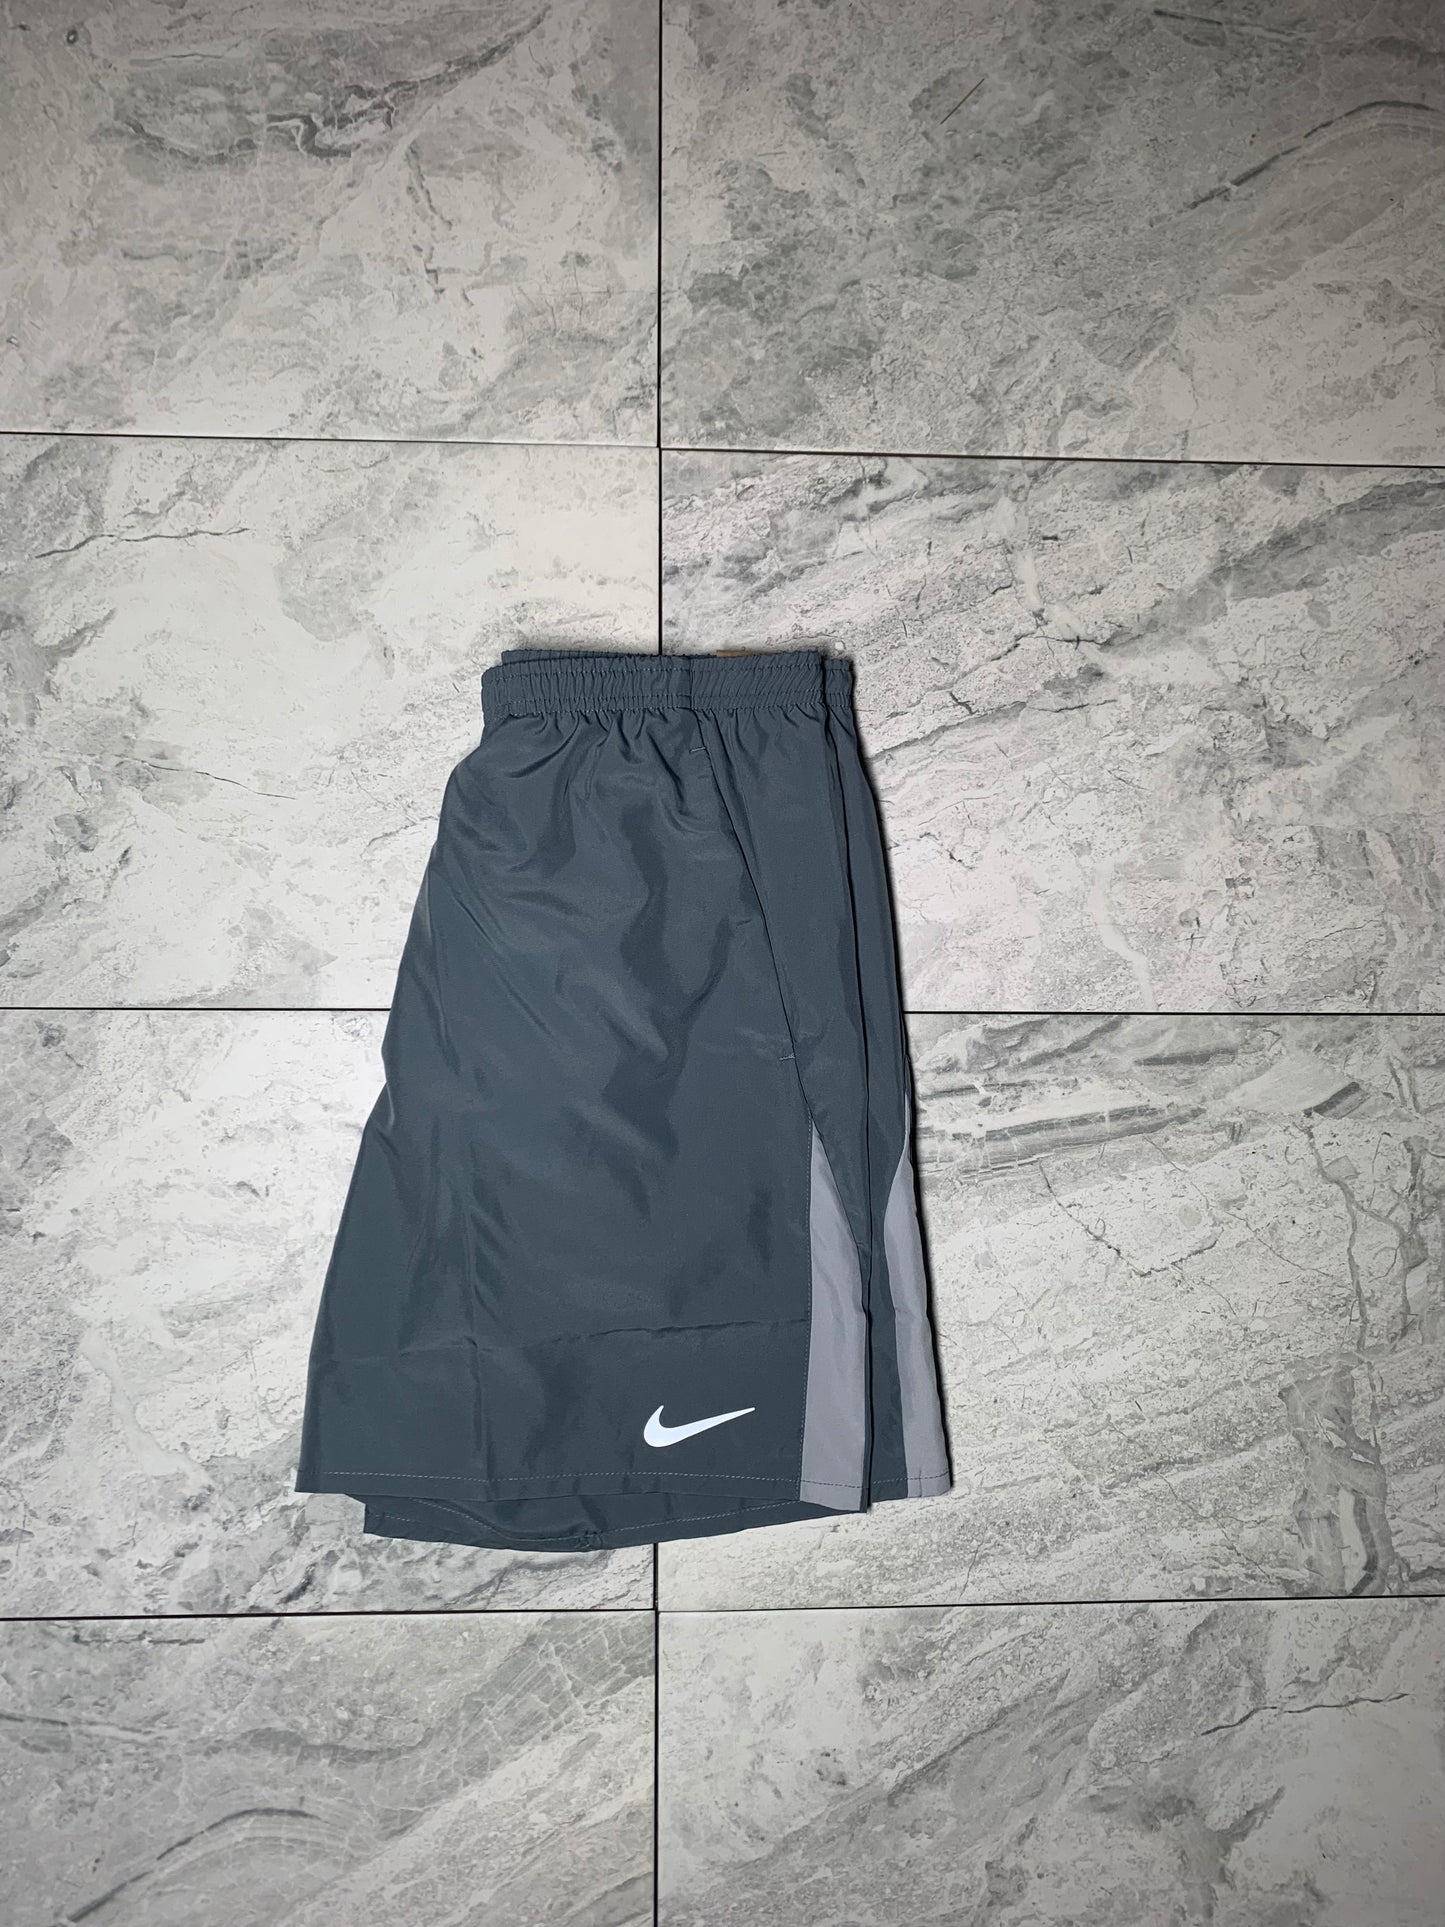 Nike challenger shorts